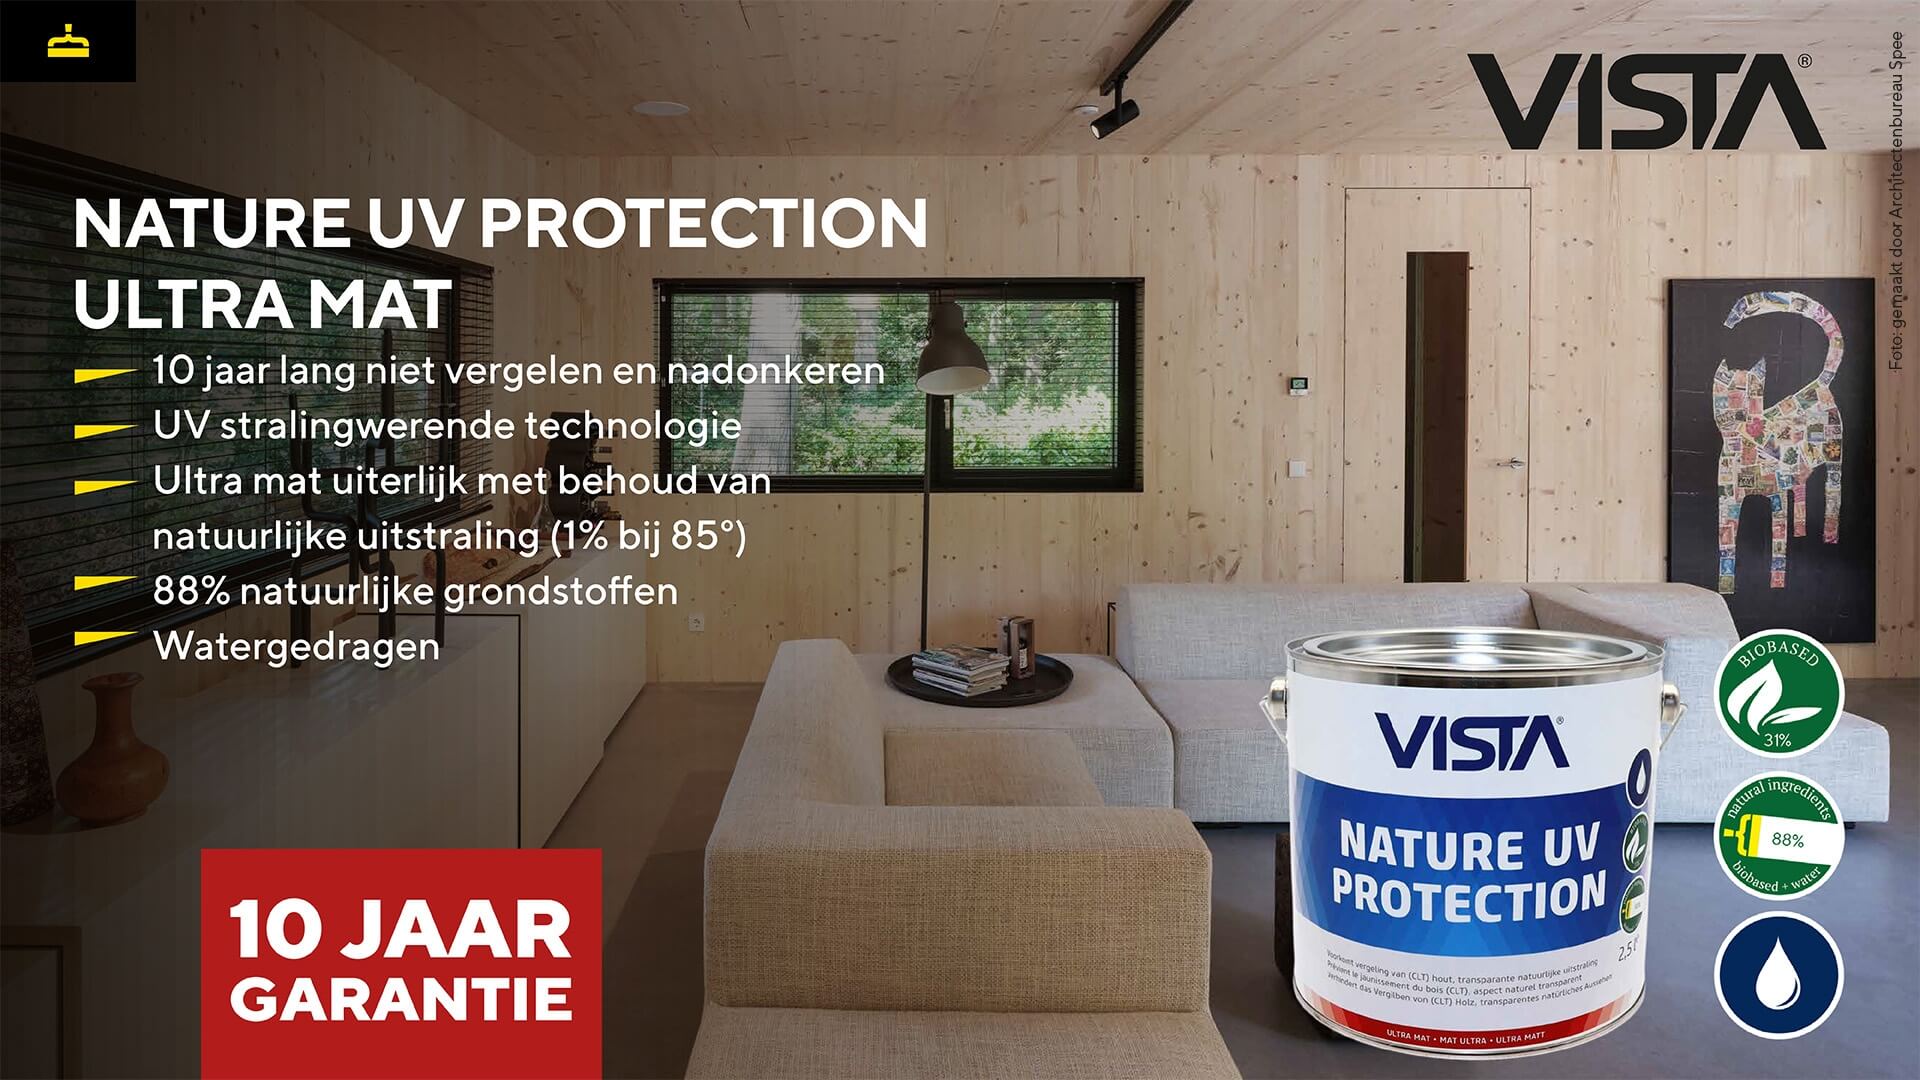 Vista Nature UV Protection